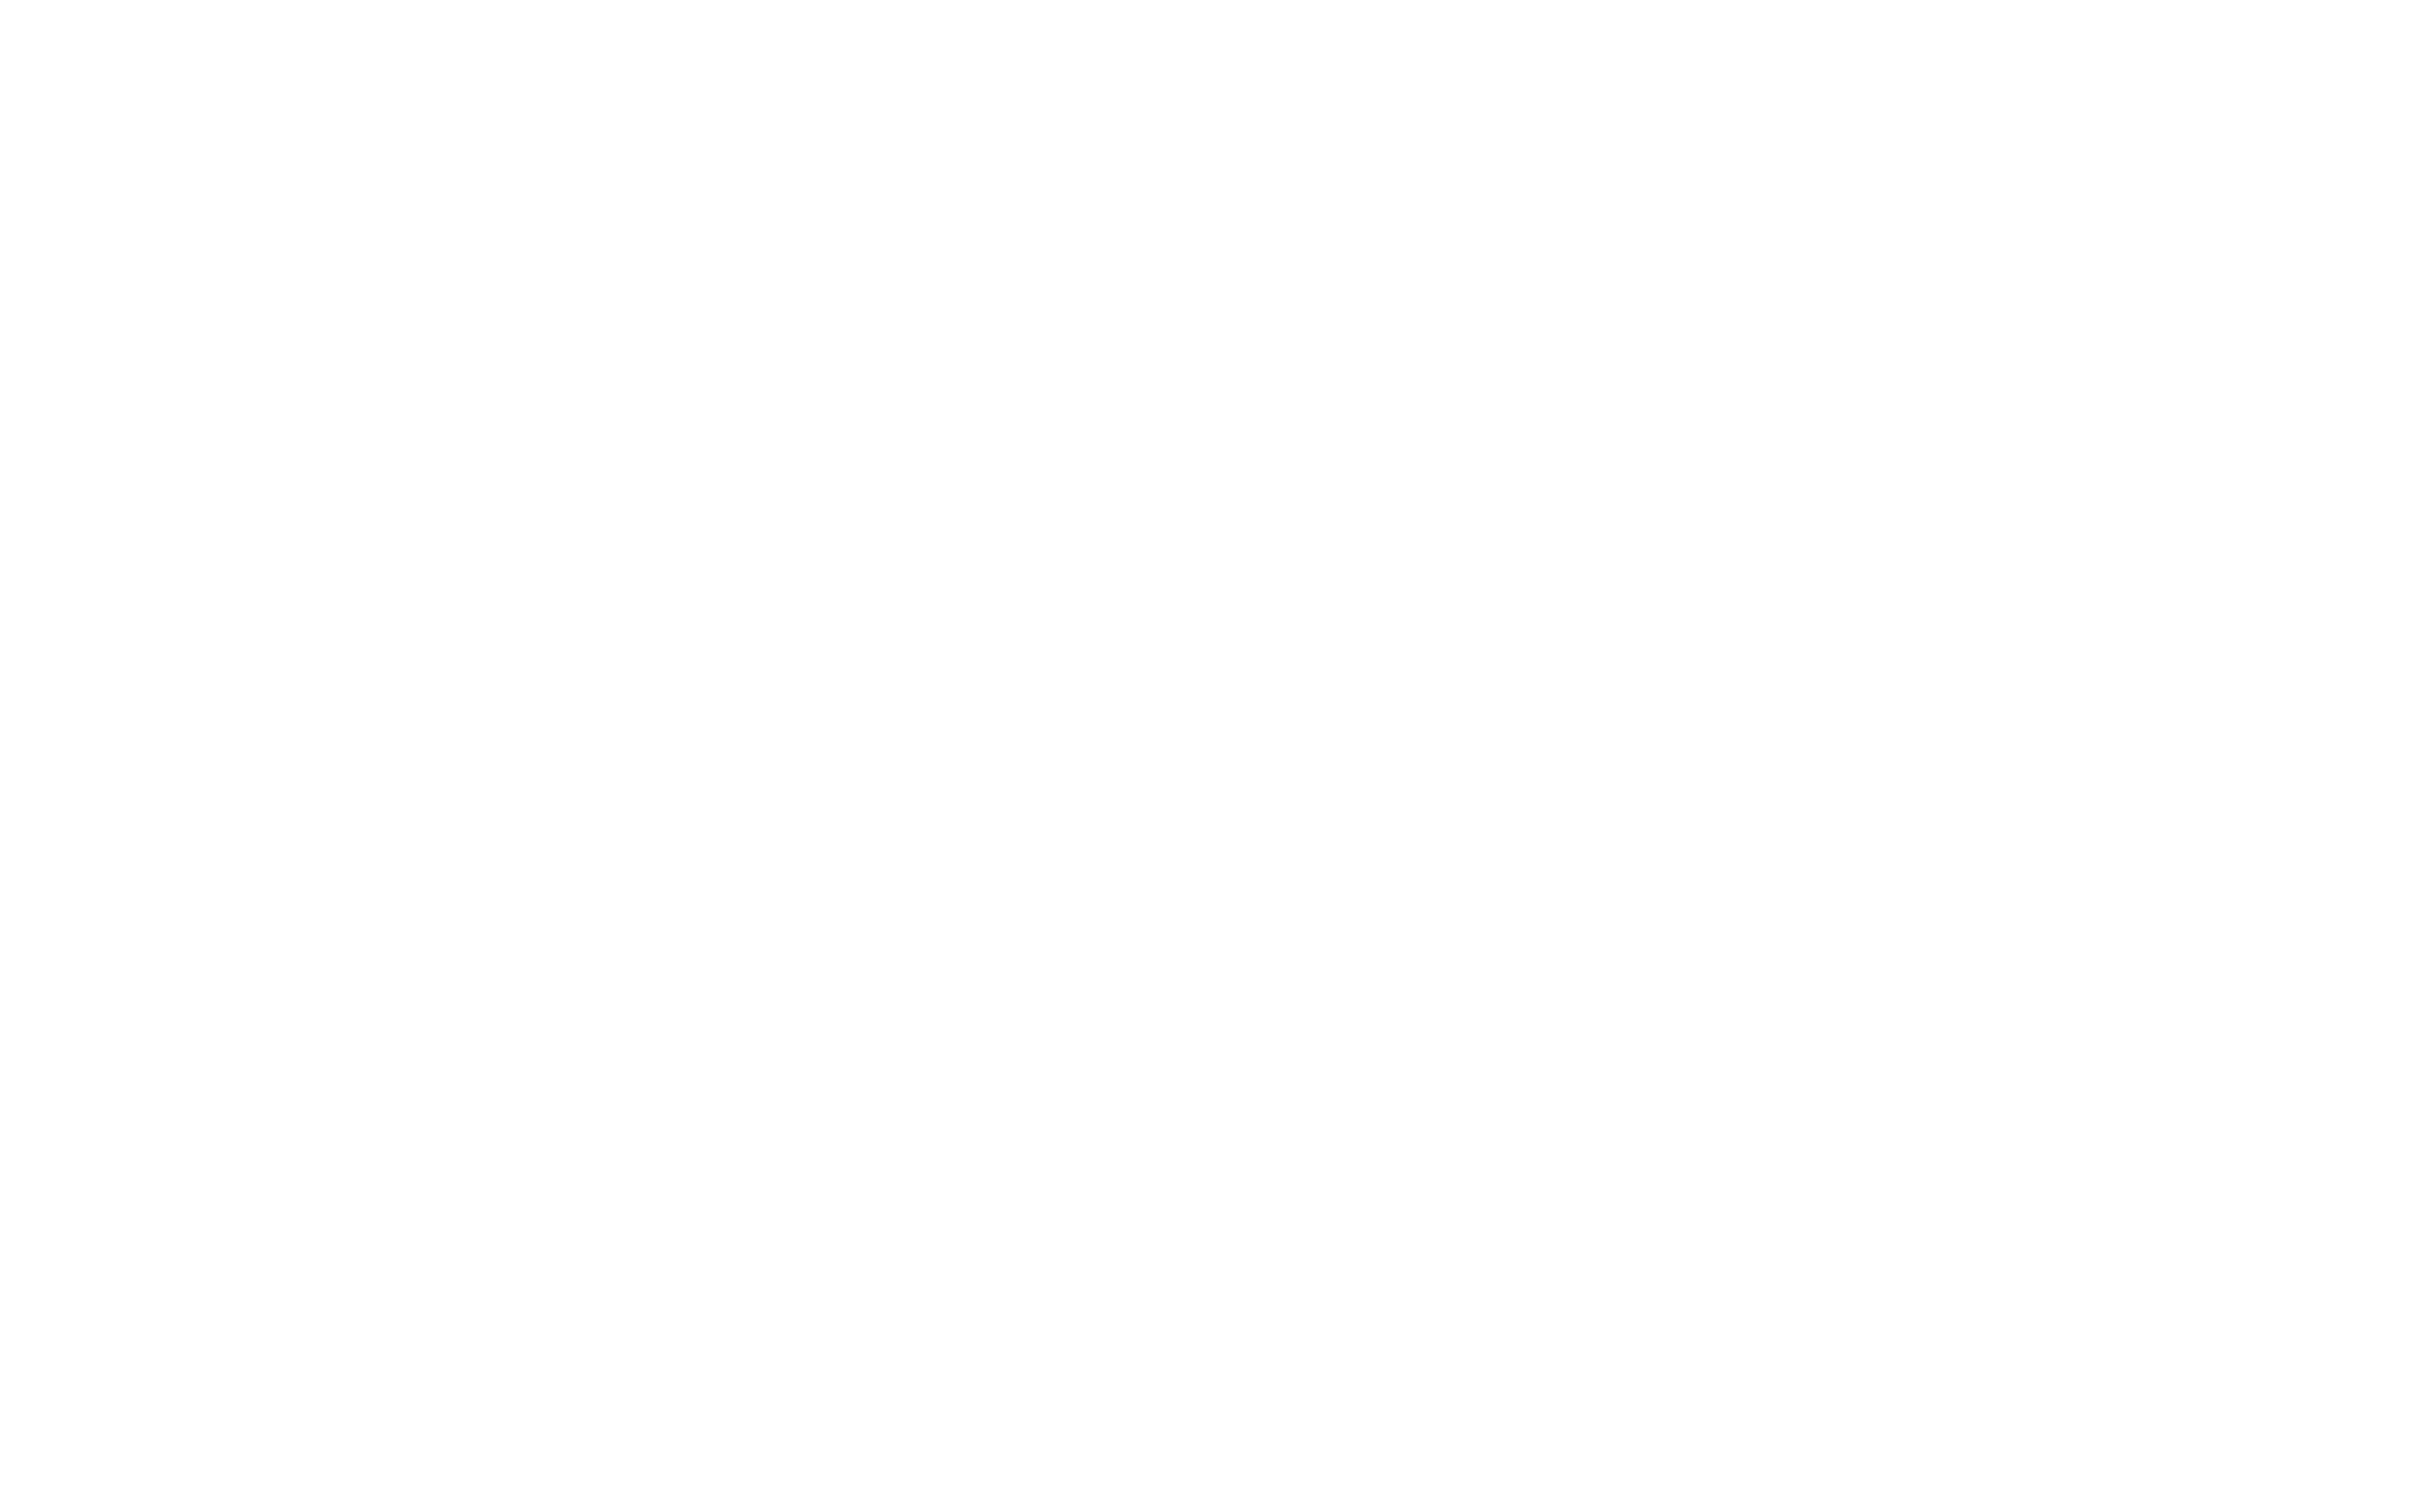 Codscon Travel & Tourism